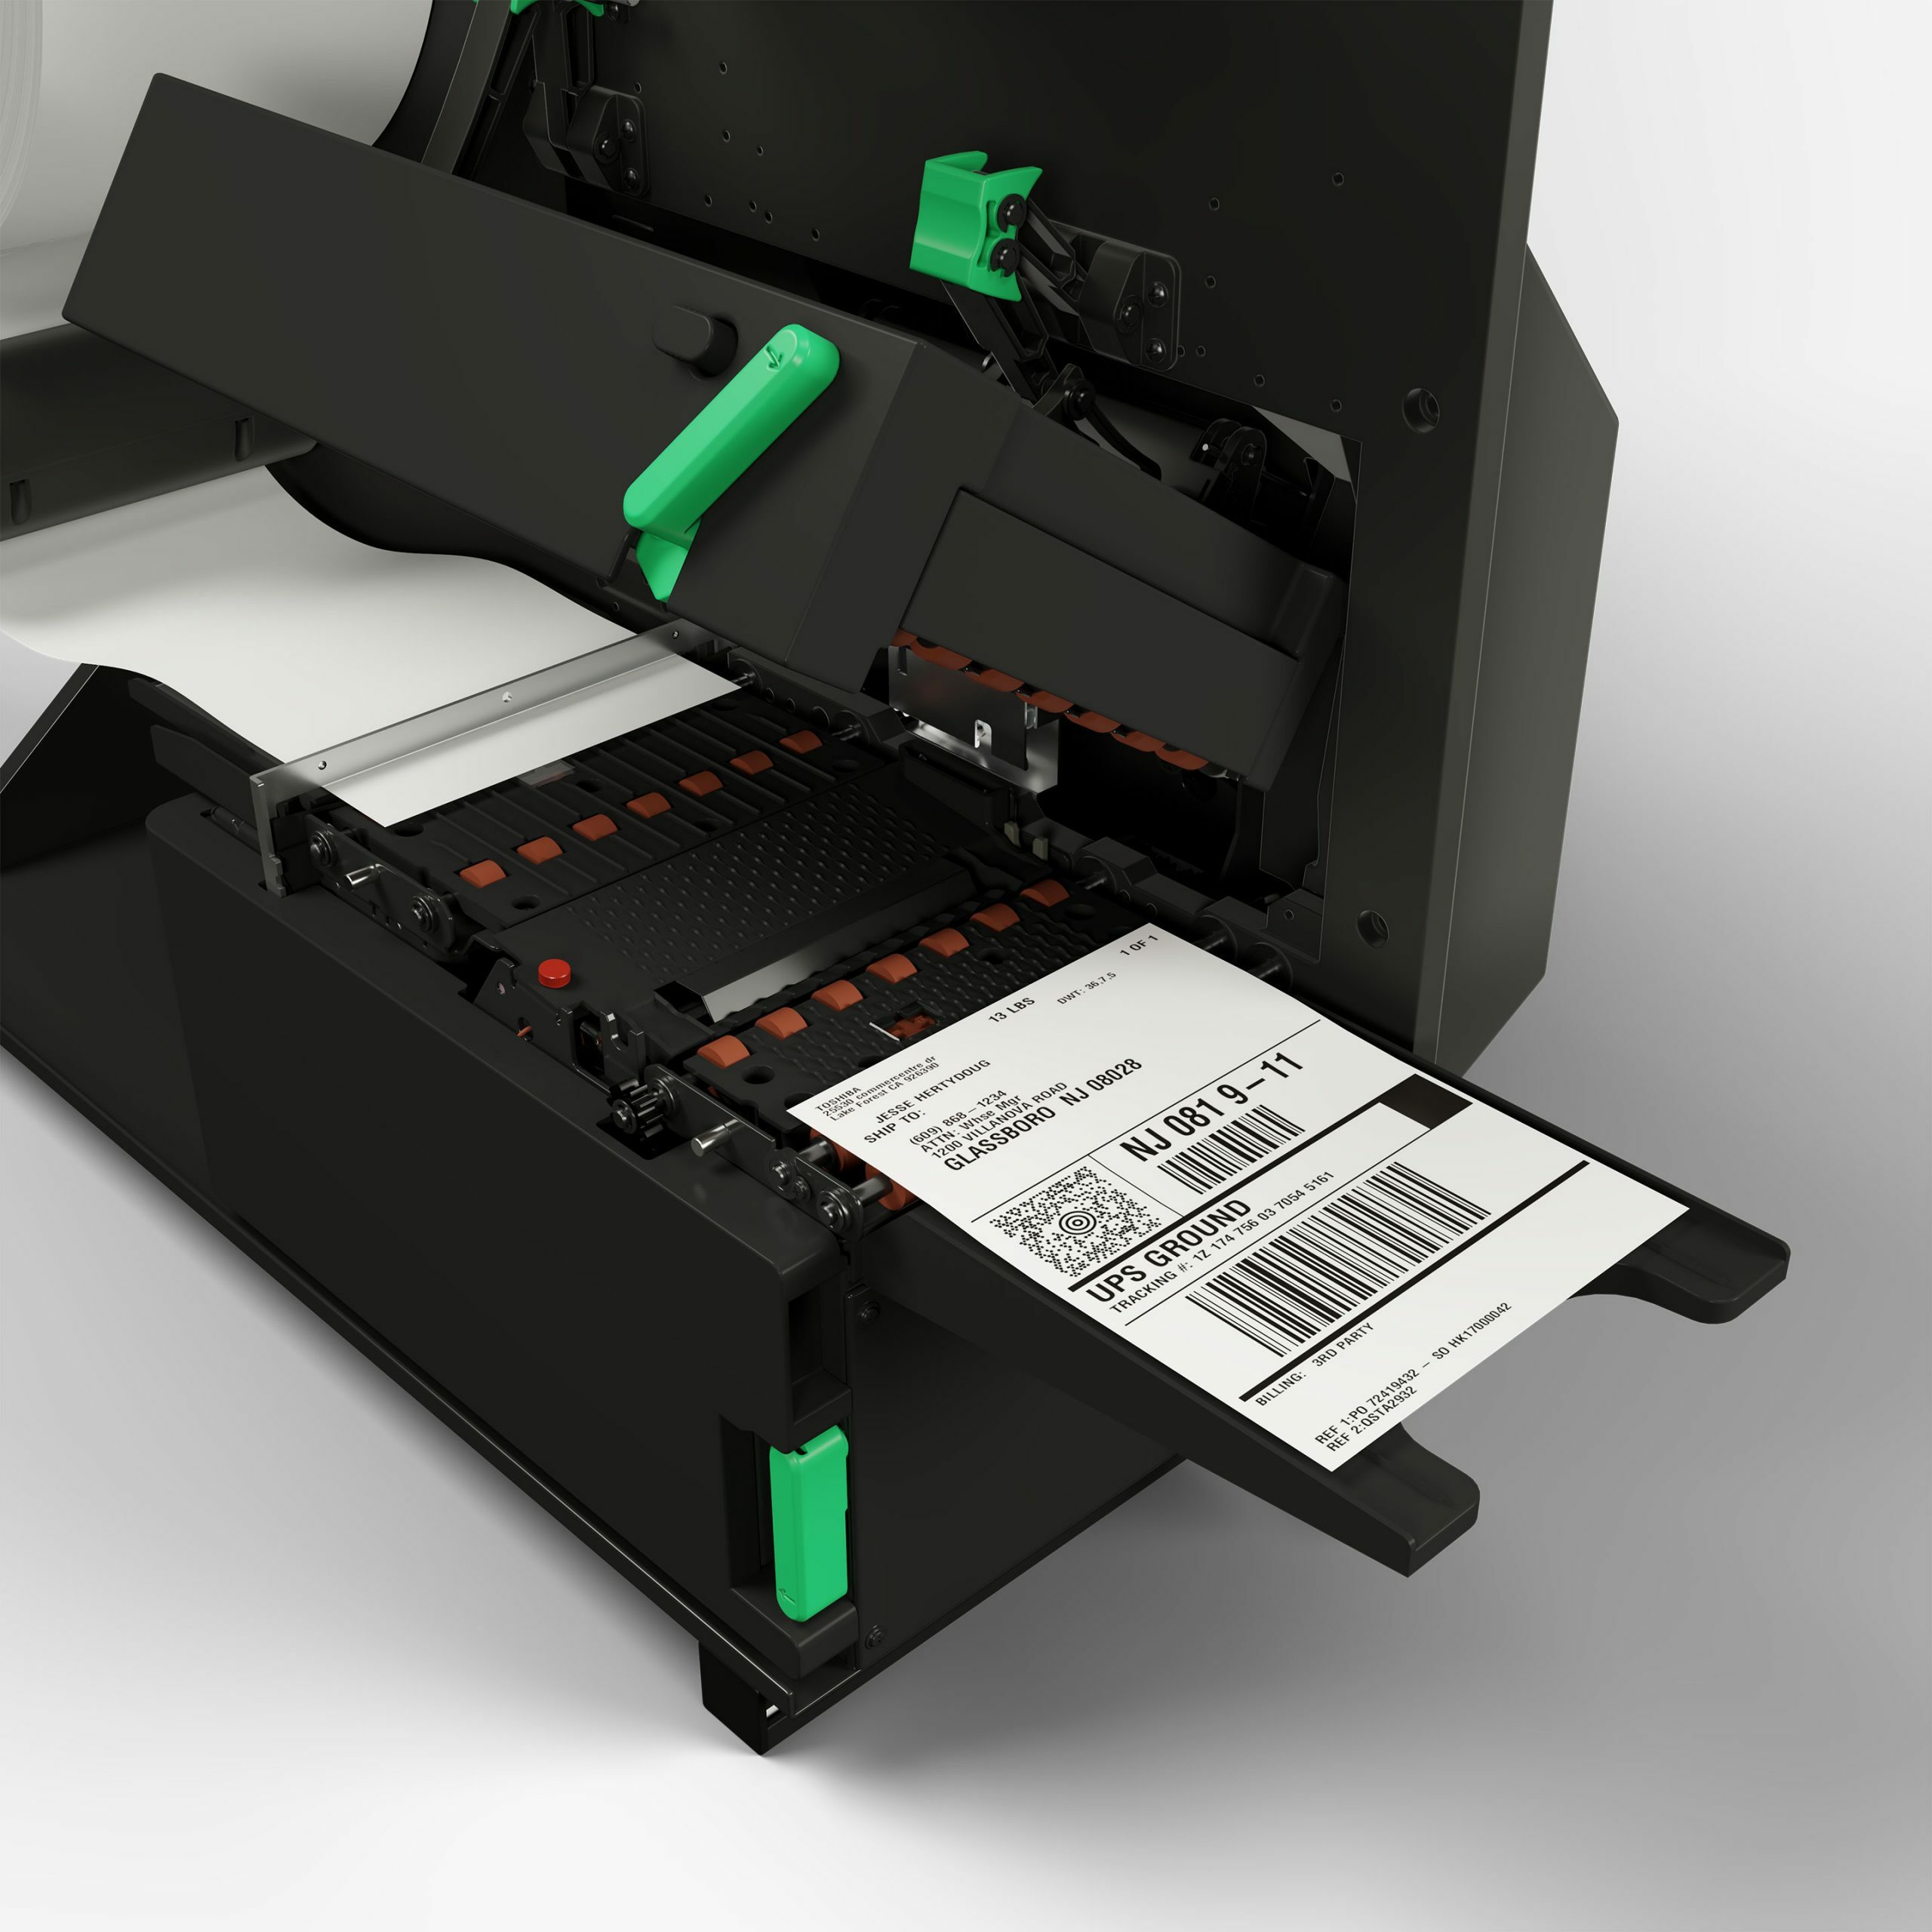 Sleek Toshiba dual-sided printer on a desk with vibrant printouts, symbolizing cutting-edge efficiency.